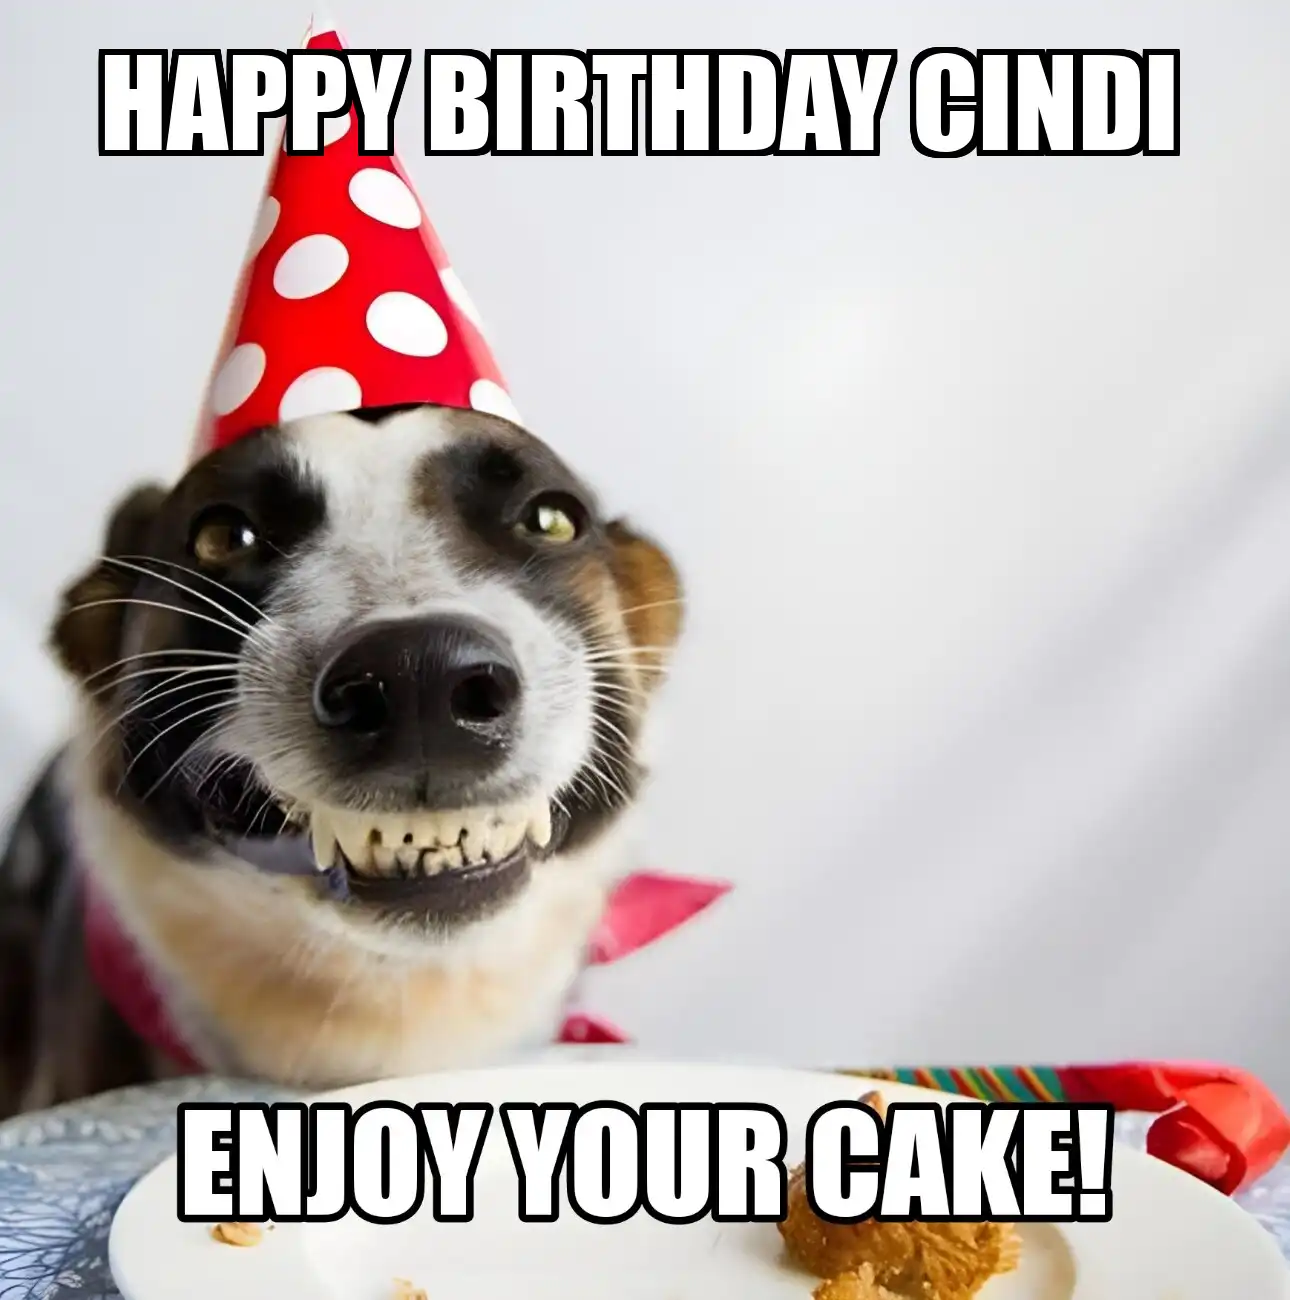 Happy Birthday Cindi Enjoy Your Cake Dog Meme